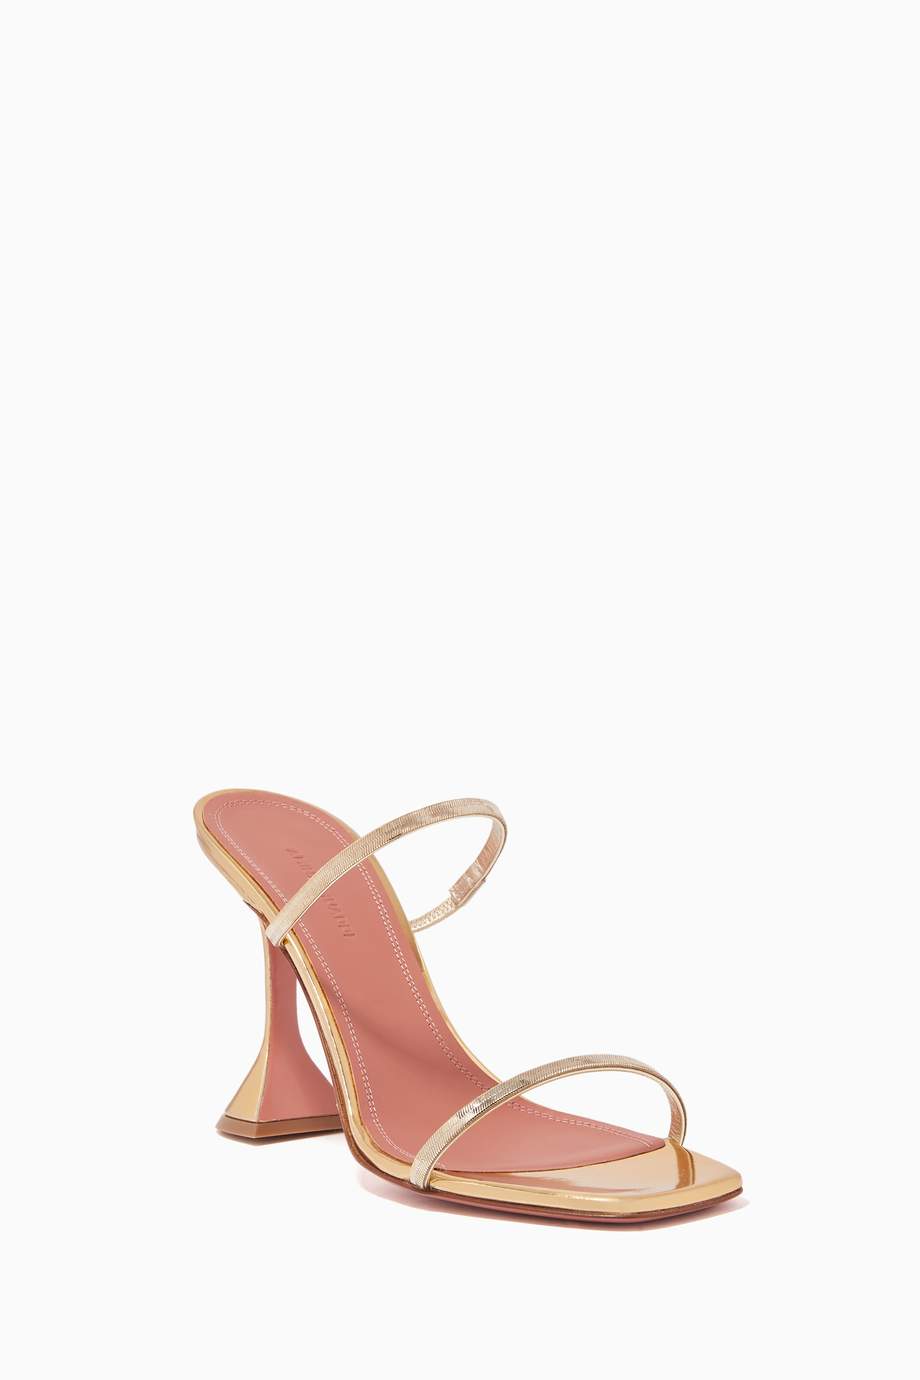 Shop Amina Muaddi Gold Henson 95 Slipper Sandals in Mirror Leather for ...